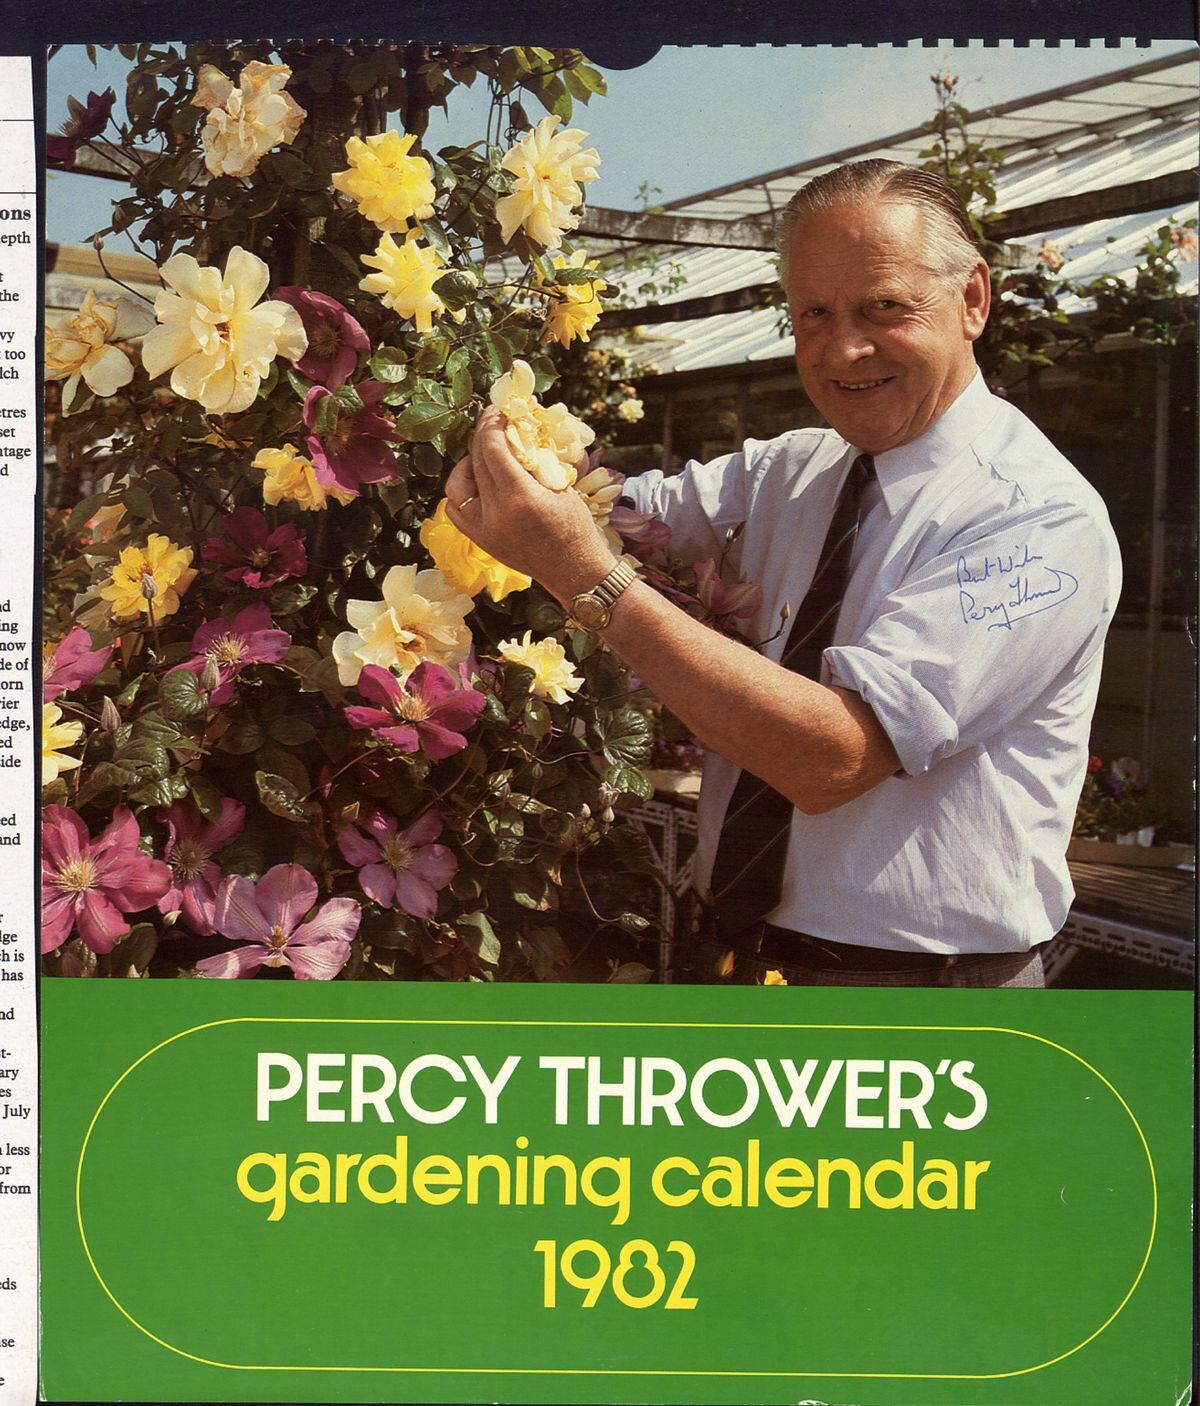 Percy Thrower's gardening calendar for 1982.